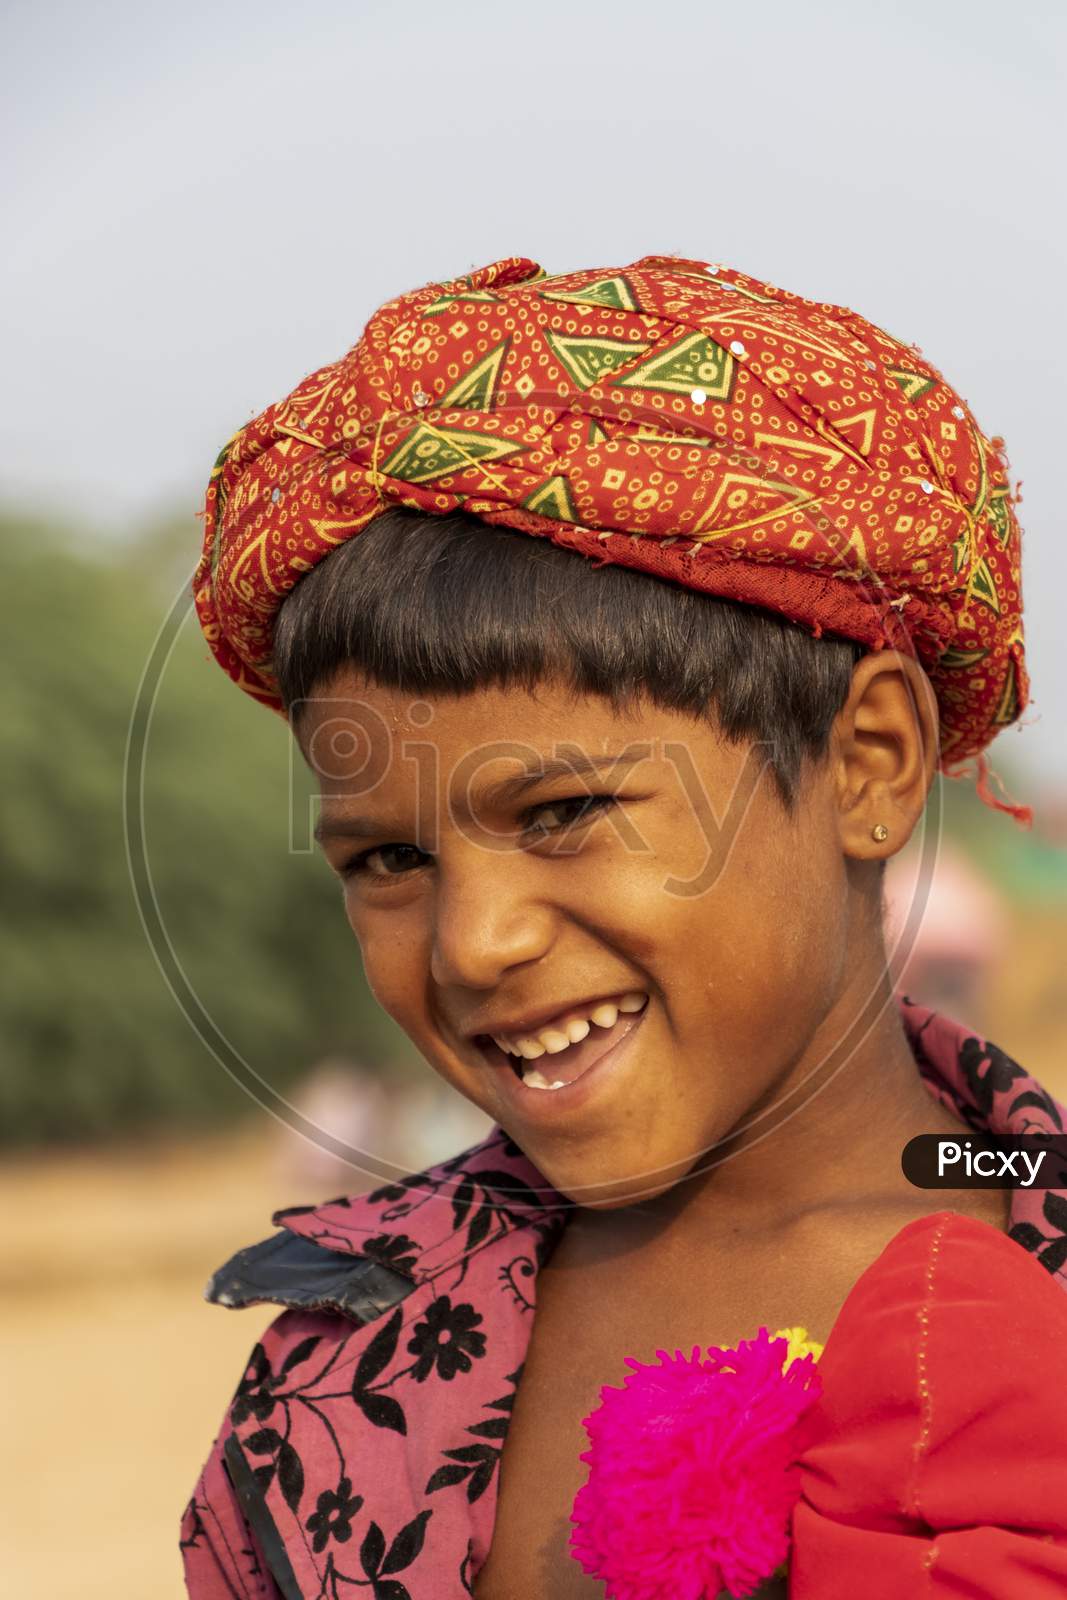 A tribal boy in Rajasthan, India